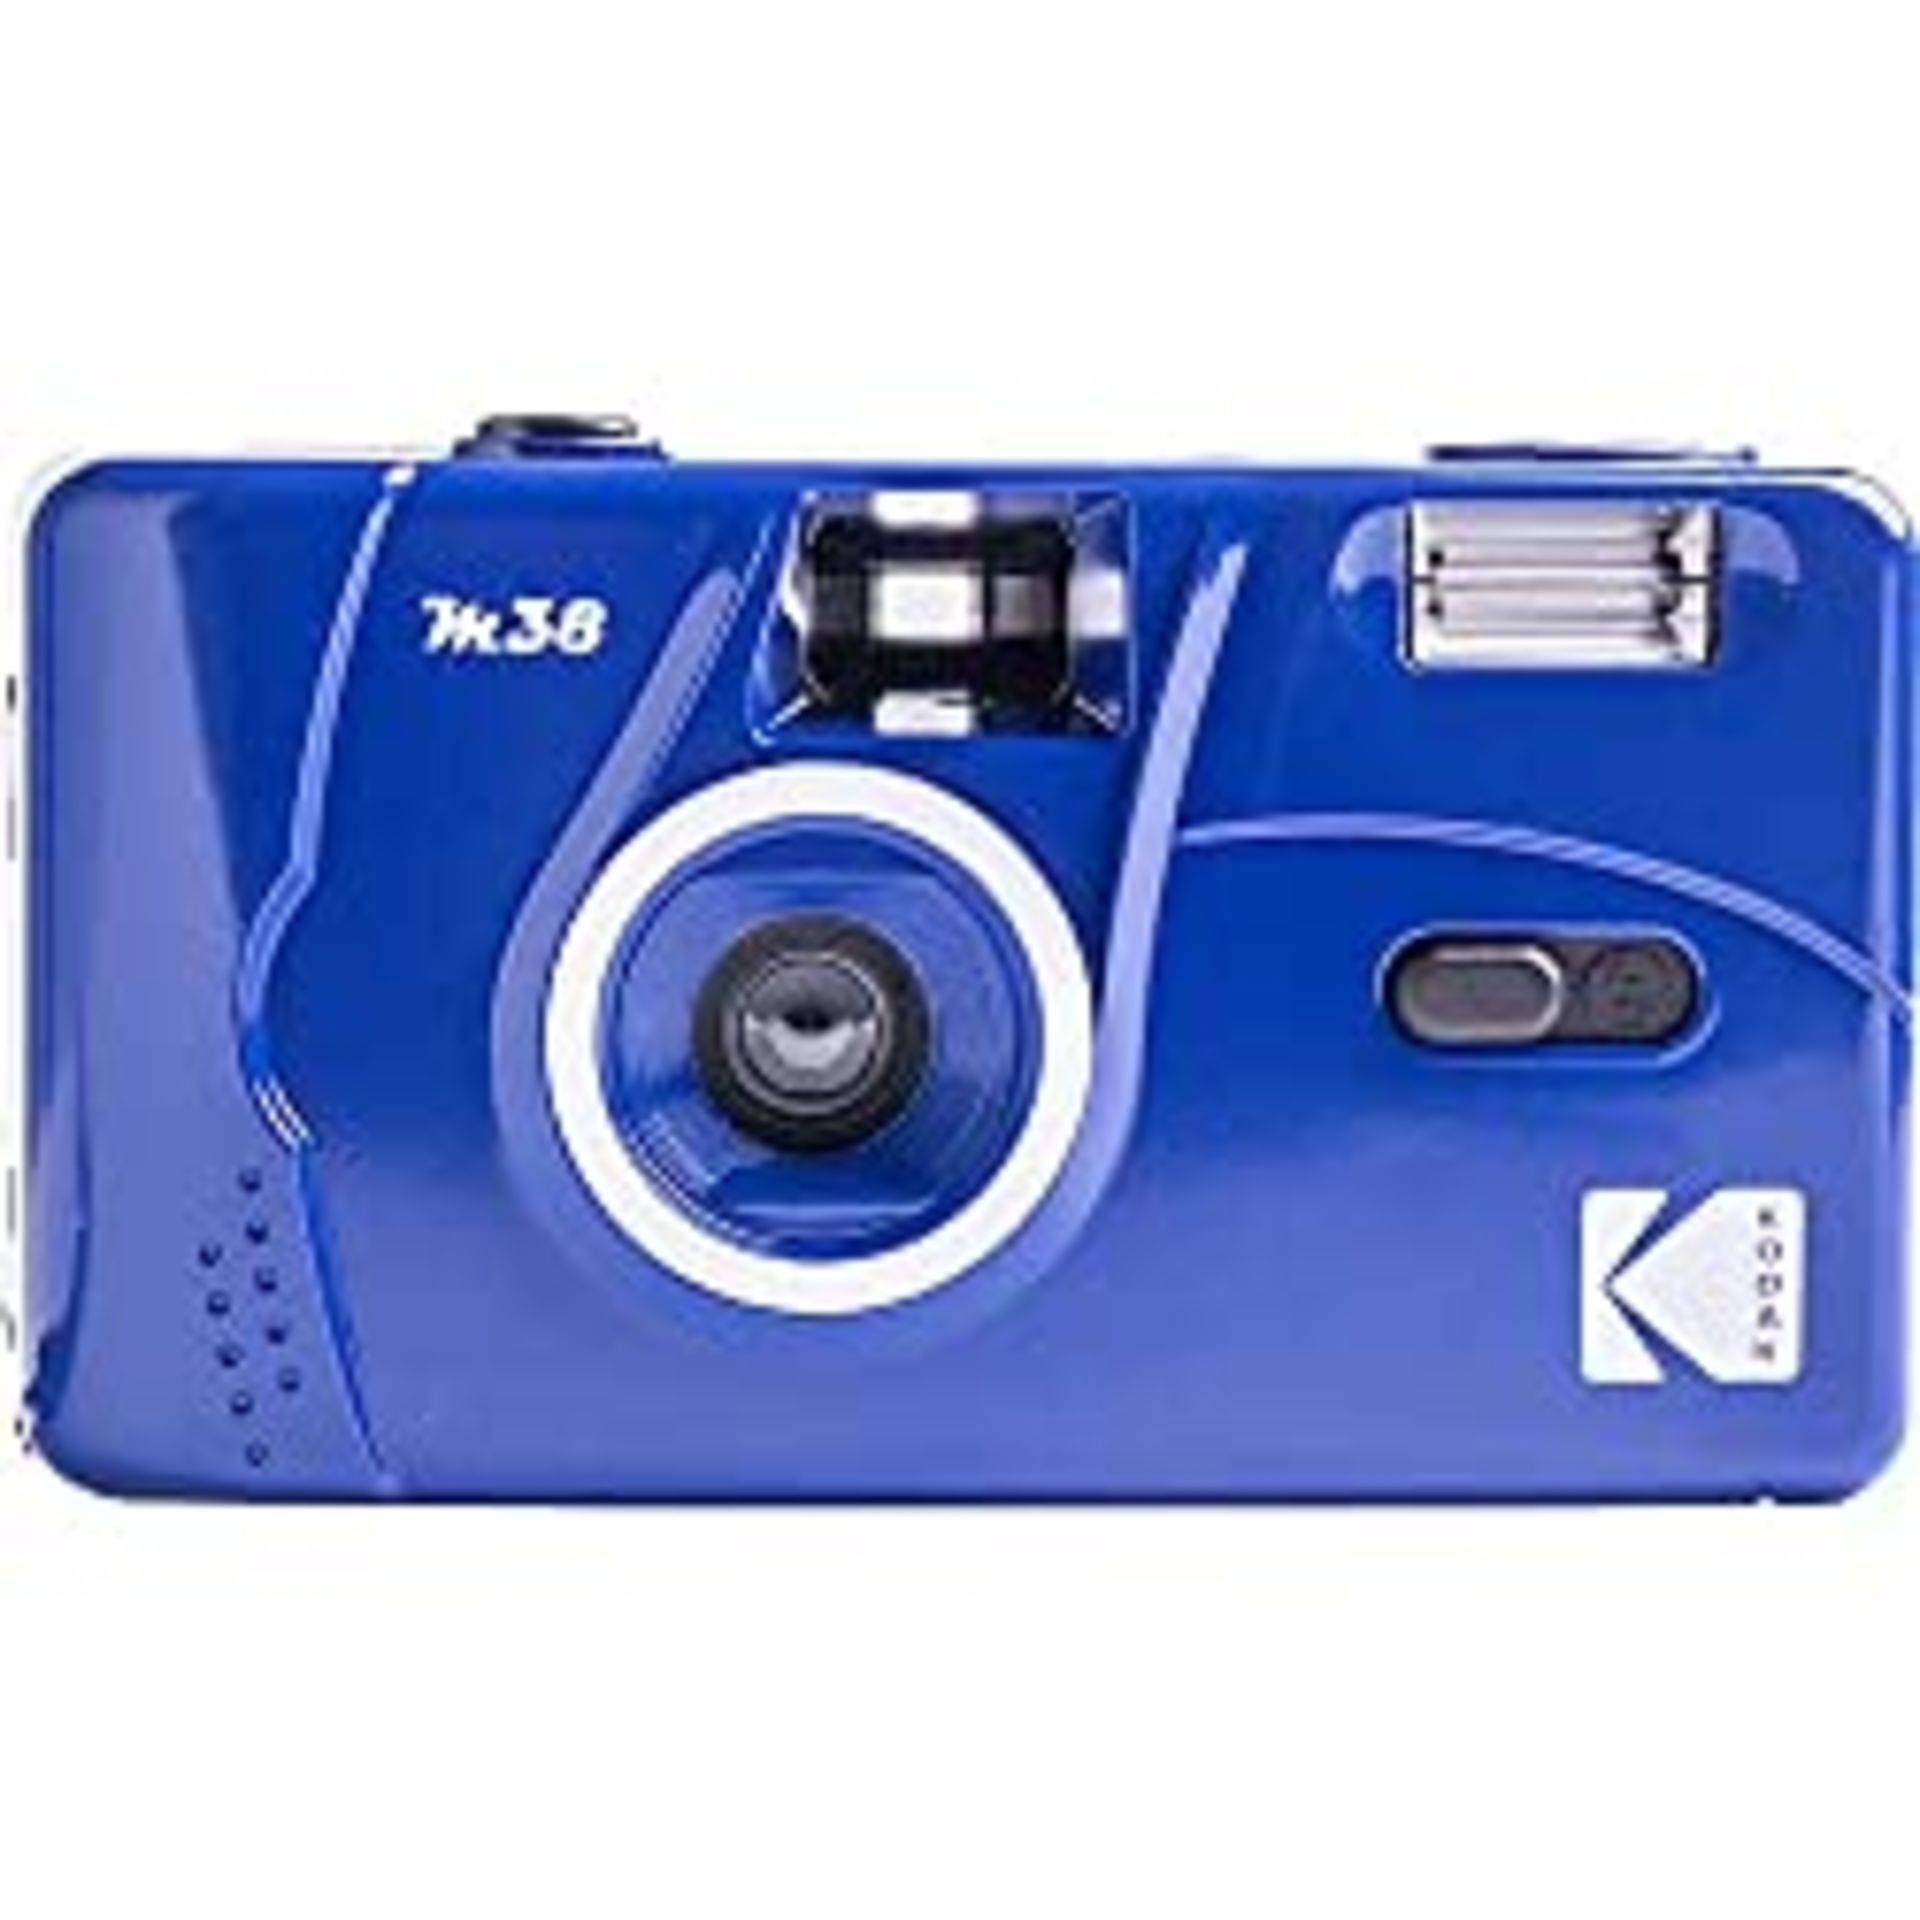 RRP £37.76 Kodak M38 35mm Film Camera - Focus Free